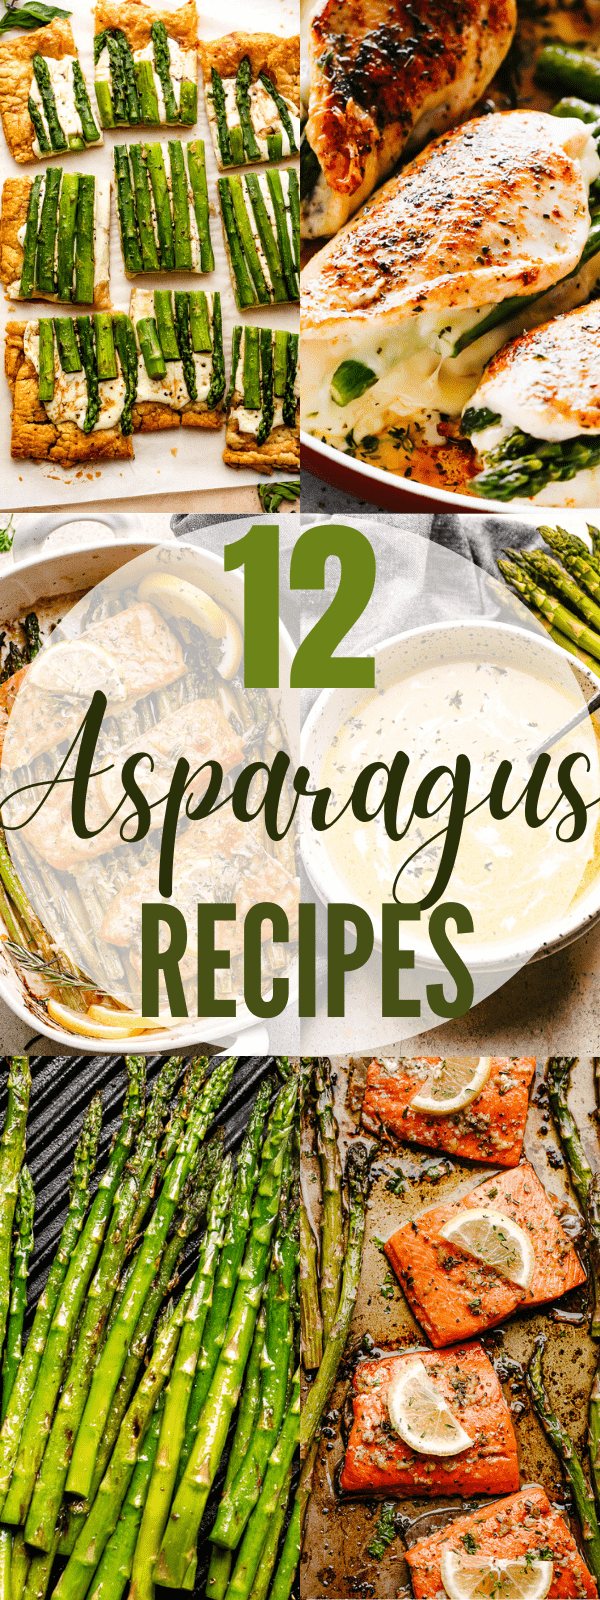 Asparagus recipes roundup collage pinterest image